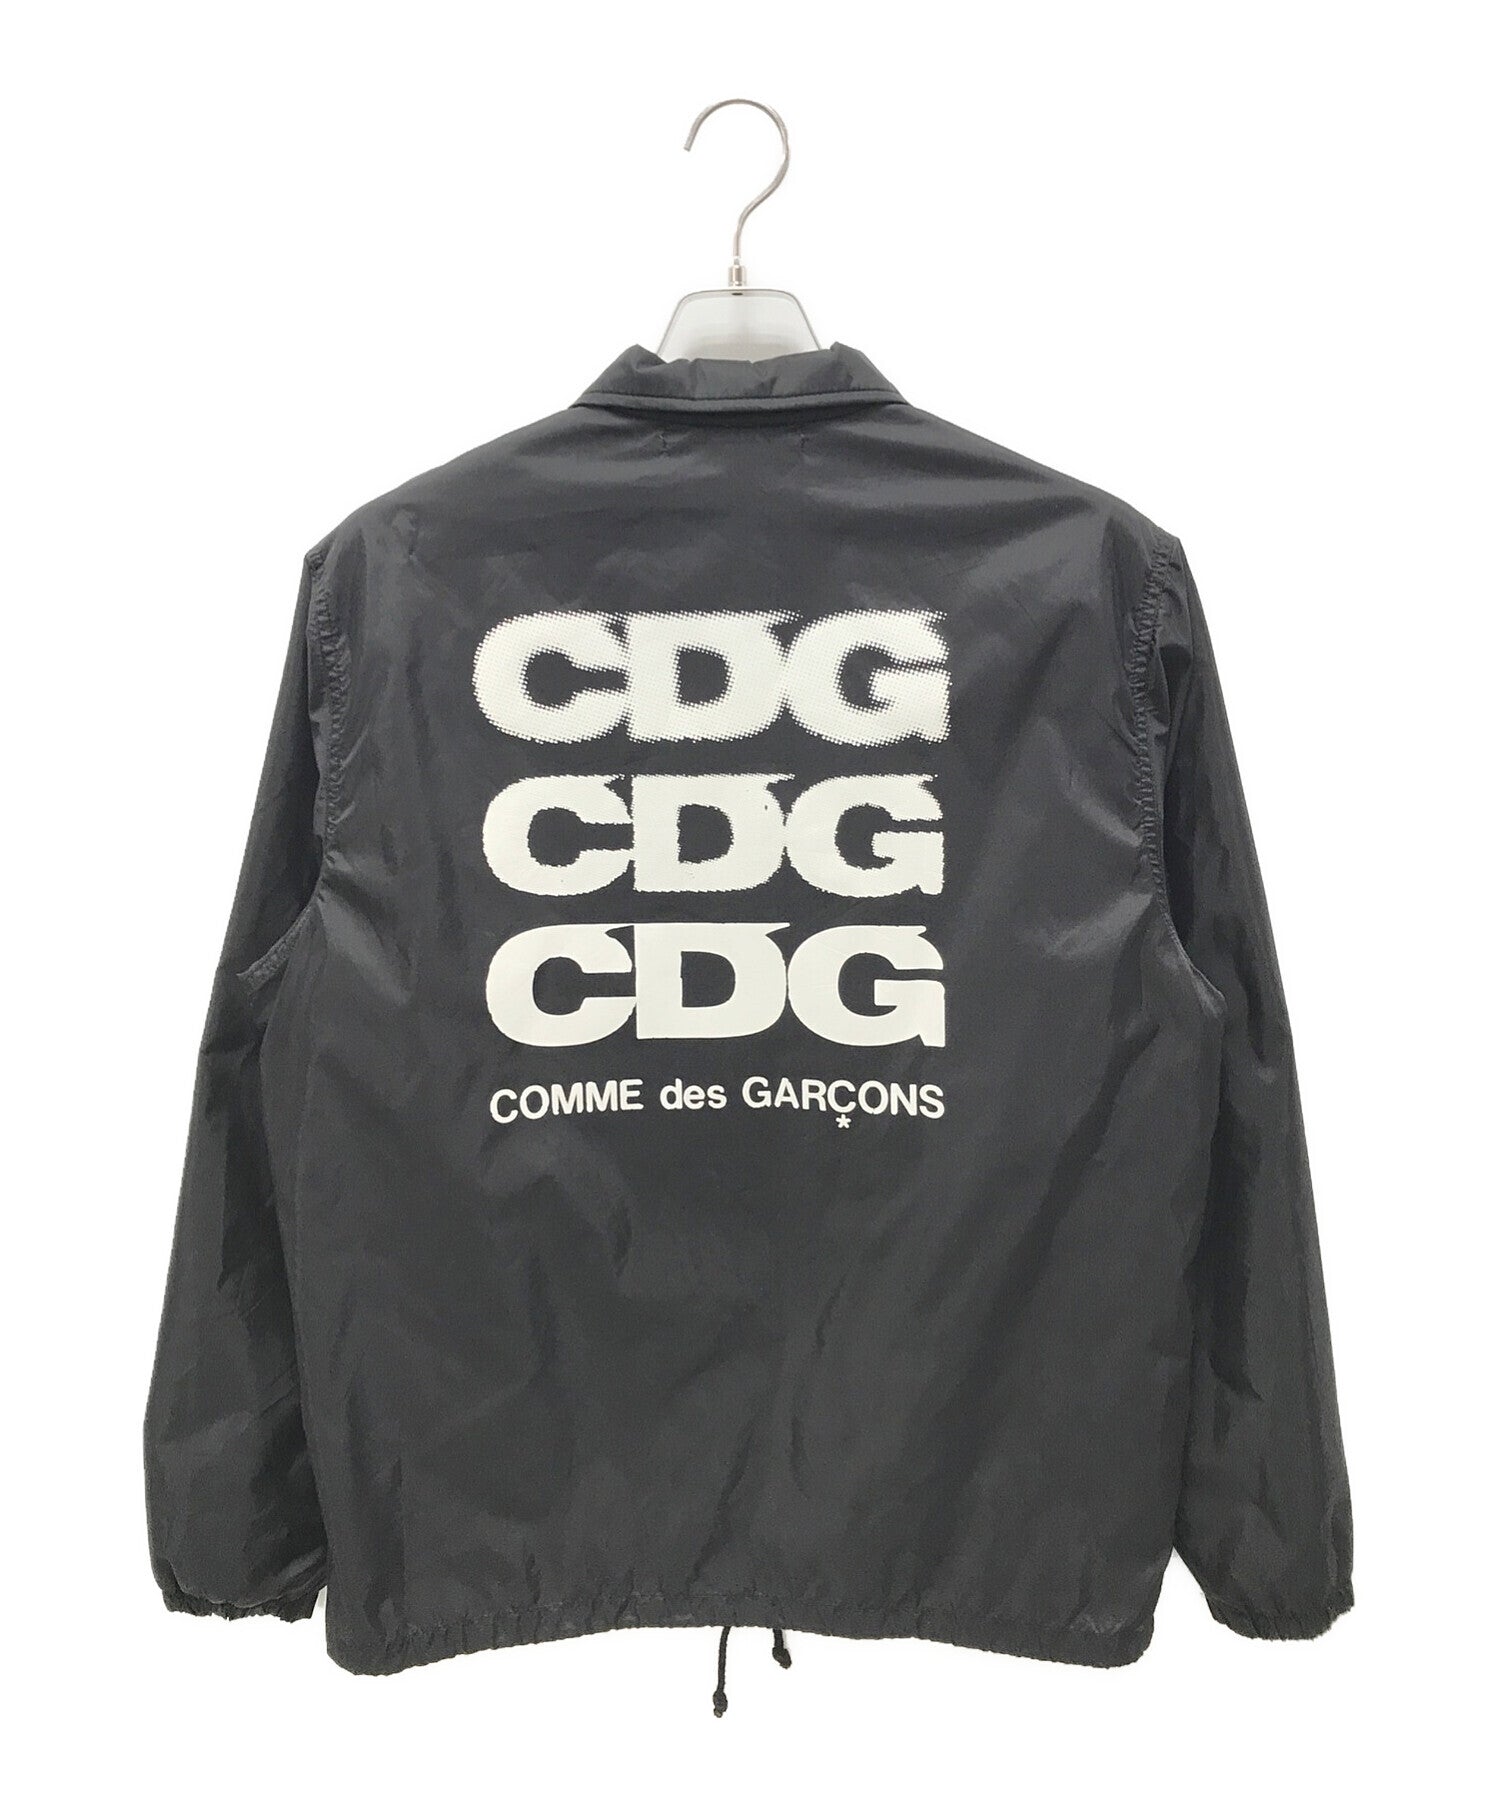 Comme Des Garcons, CDG Official Store